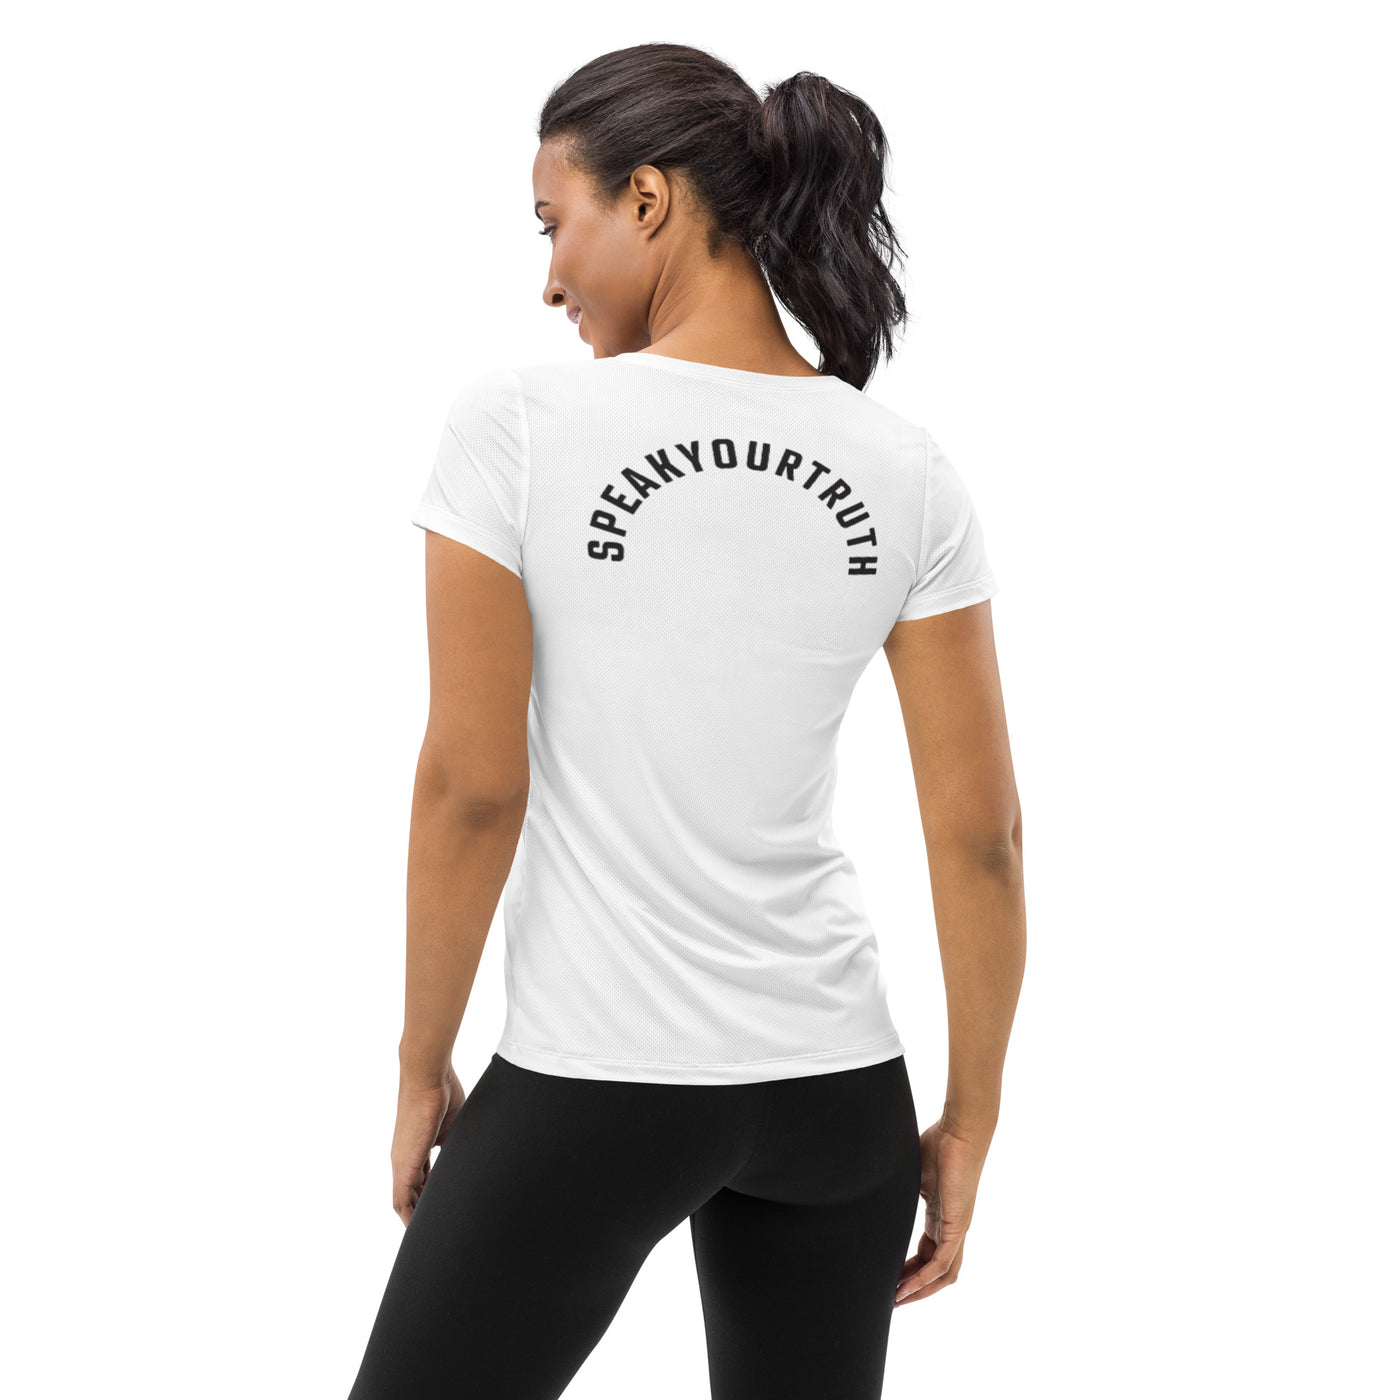 SPEAK YOUR TRUTH Women's Athletic T-shirt